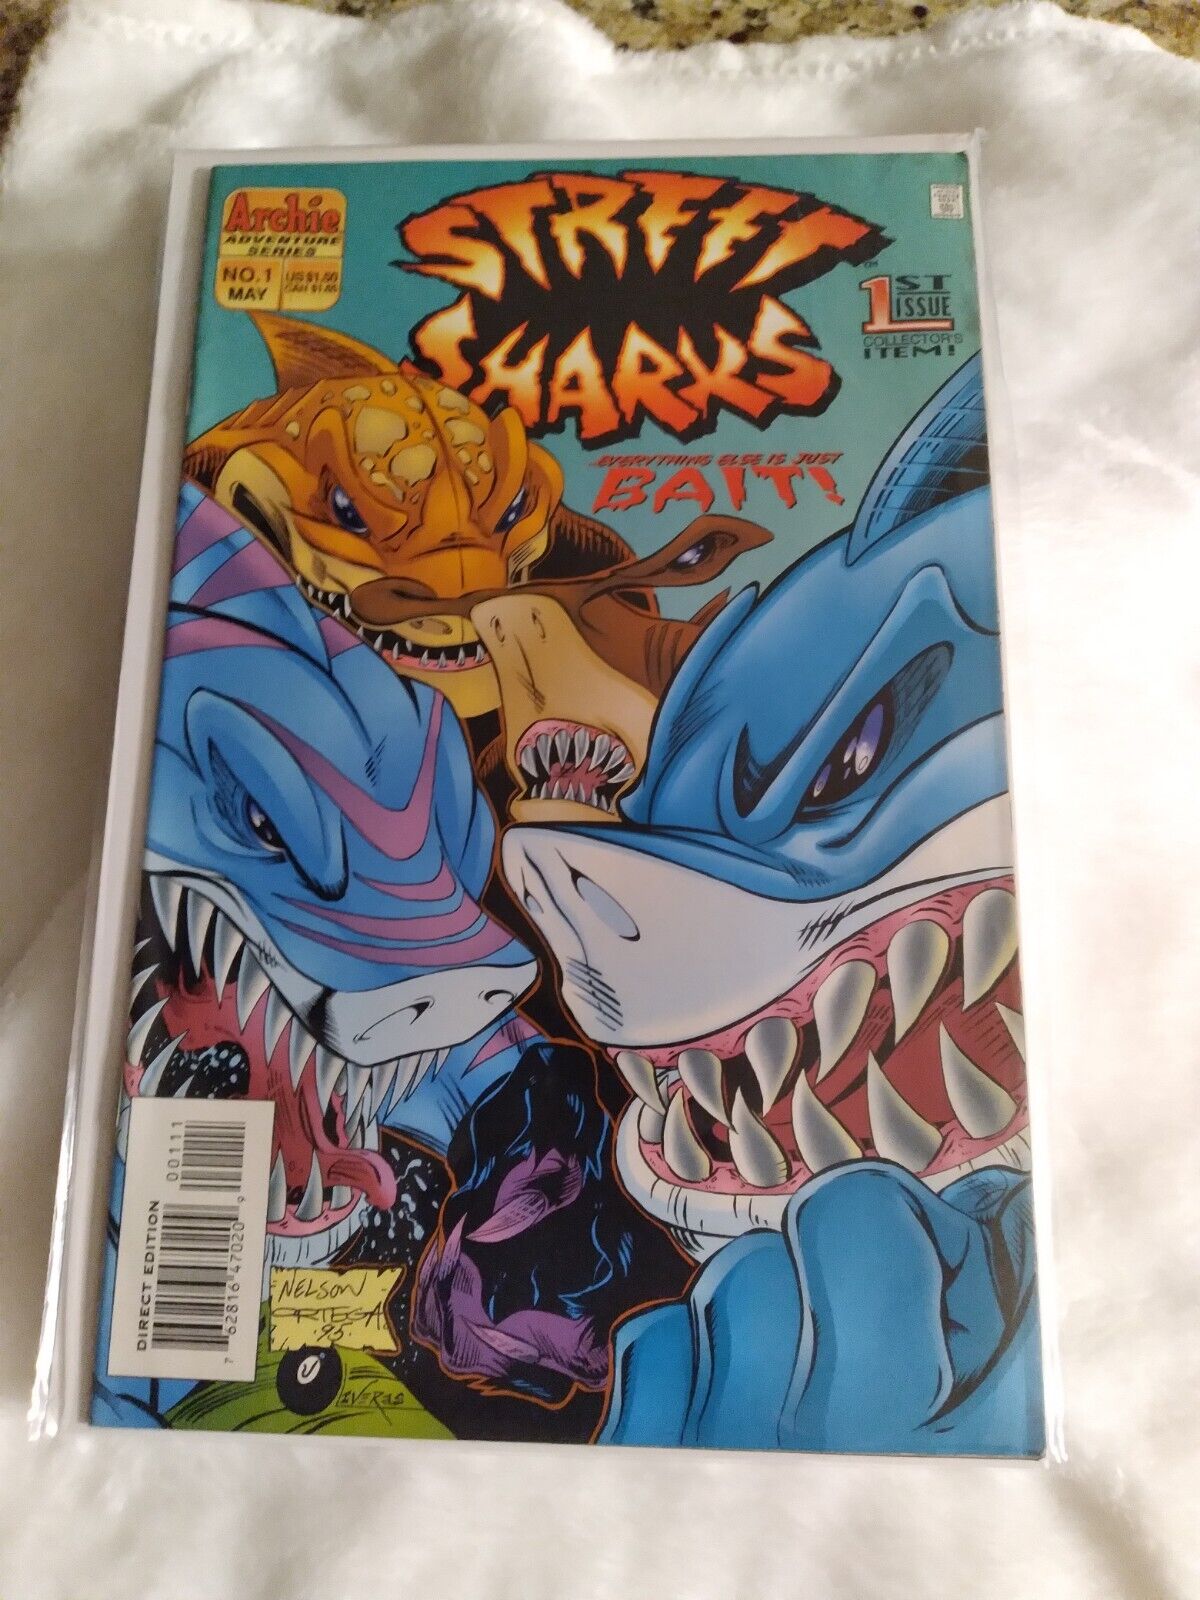 ARCHIE COMICS STREET SHARKS #1 MAY 1996 RARE